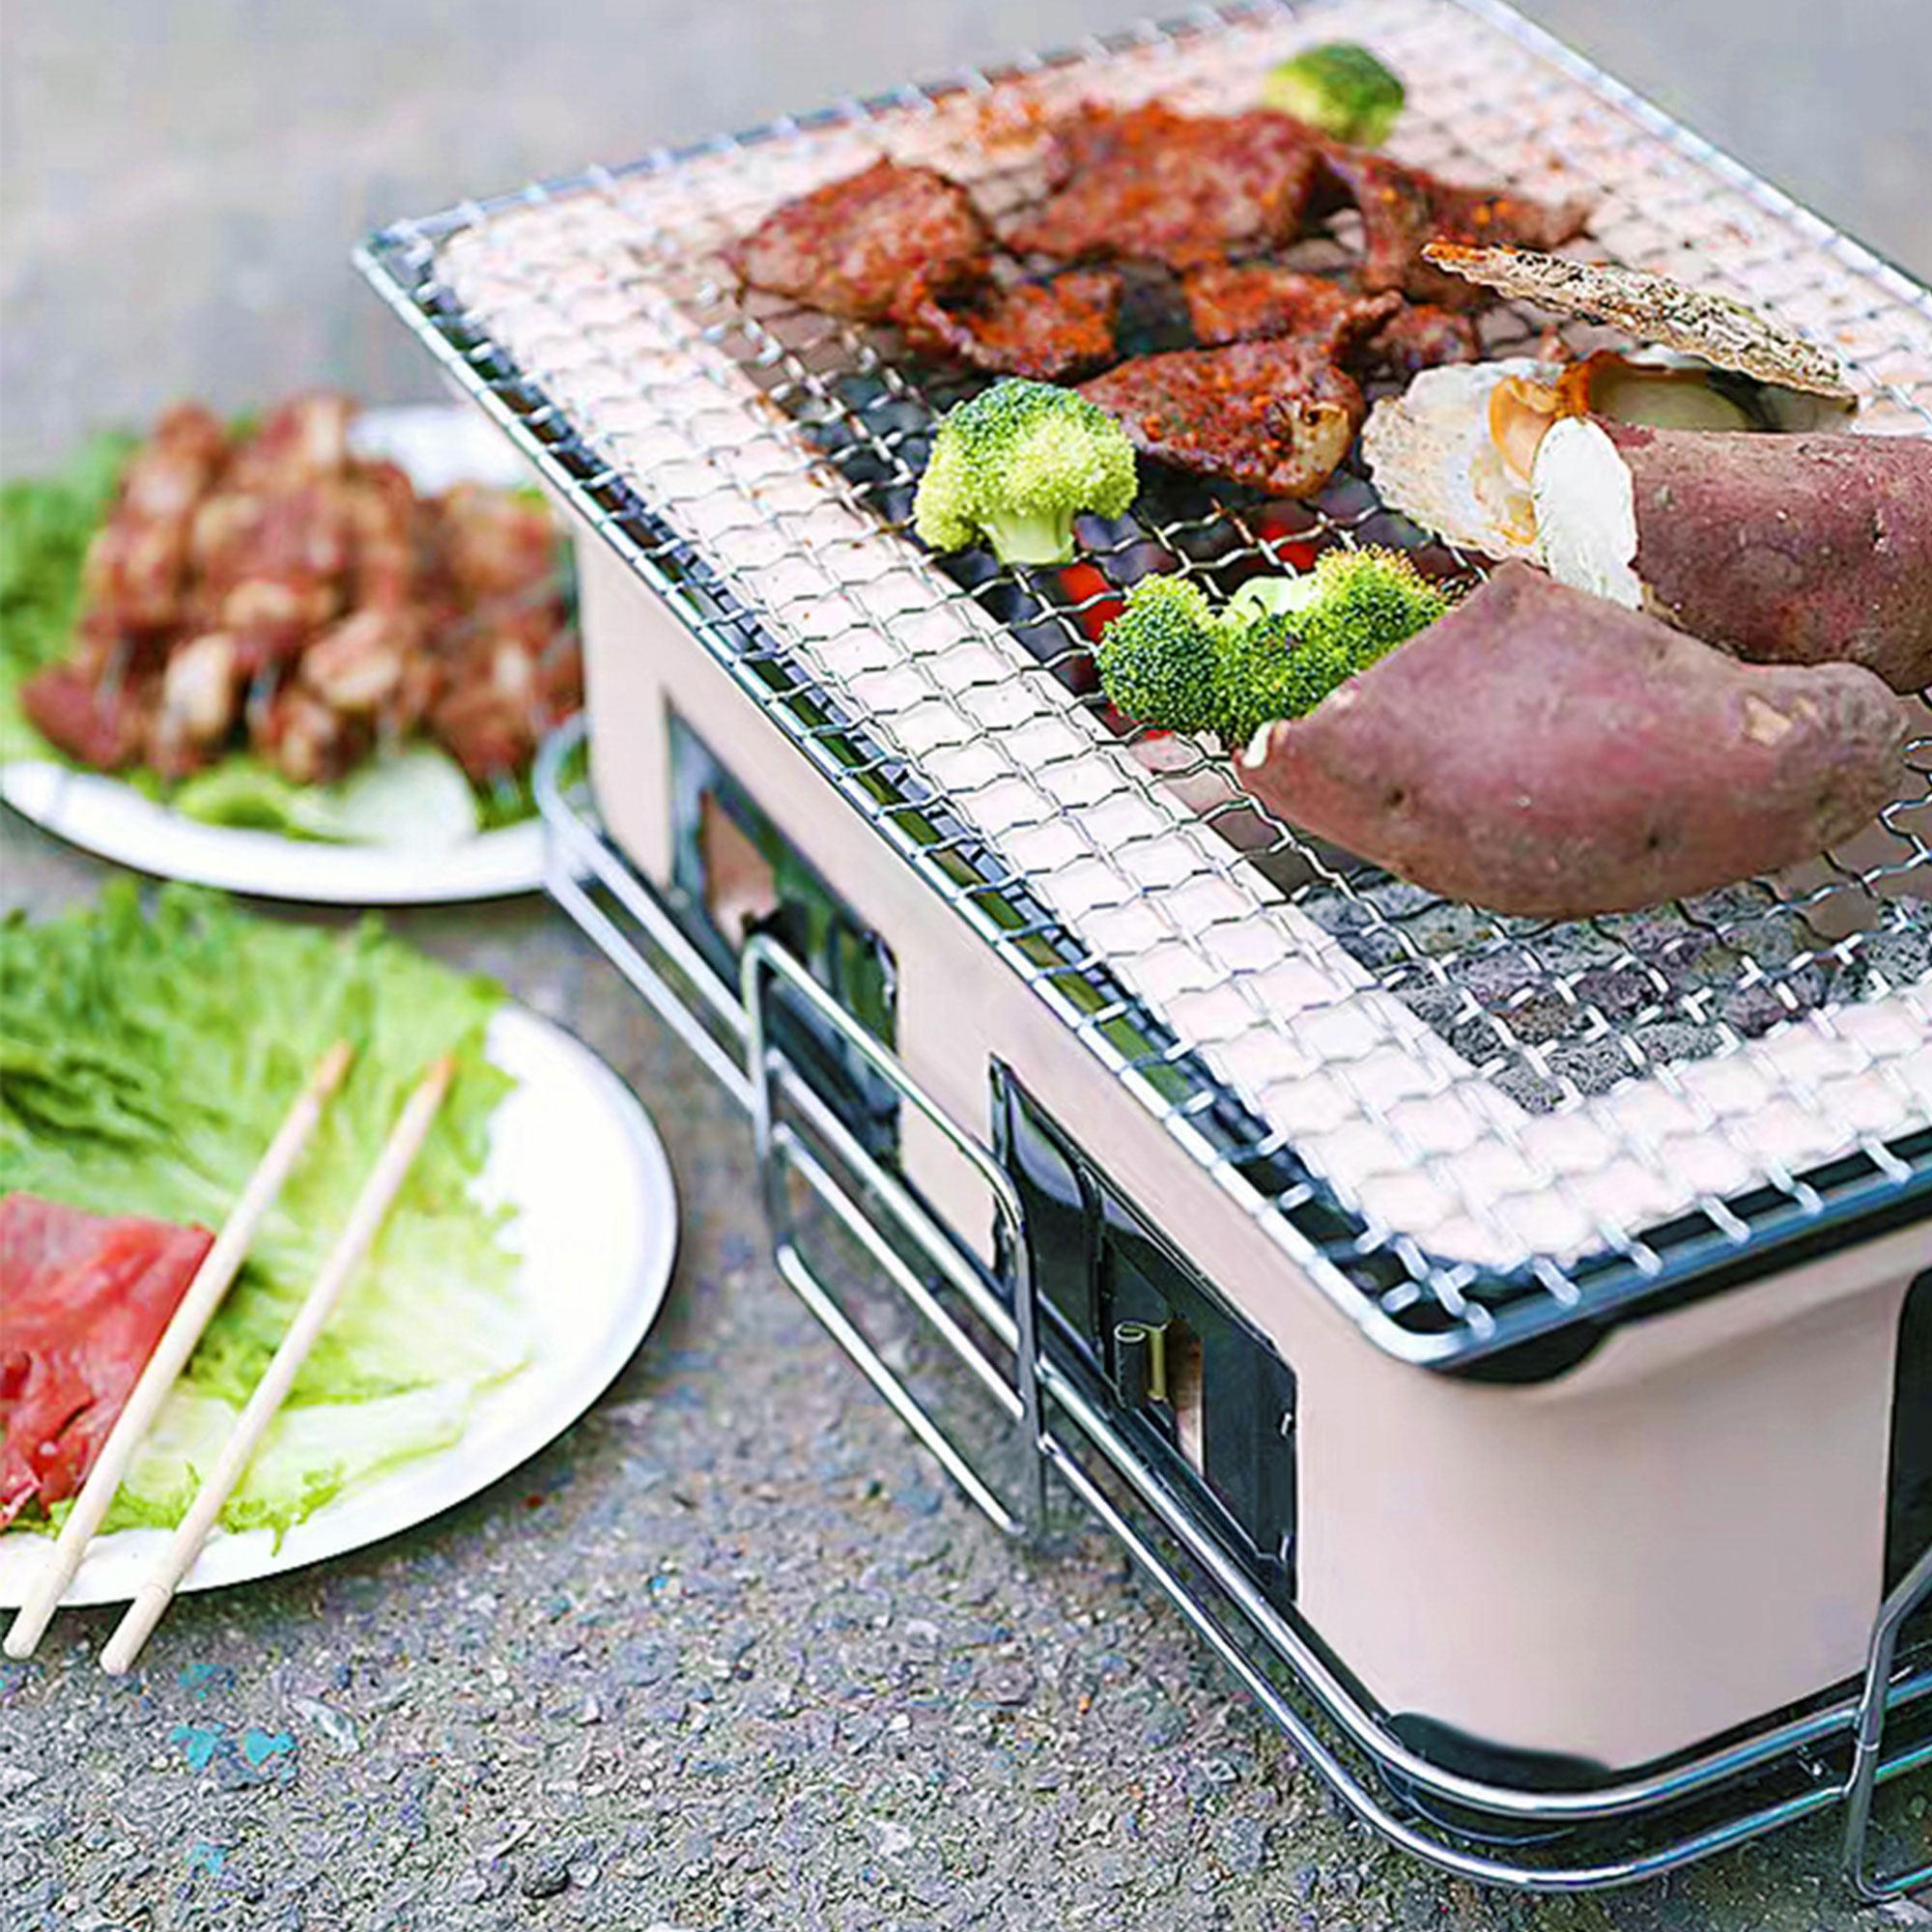 Healthy Choice Hibachi Tabletop Grill Image 5